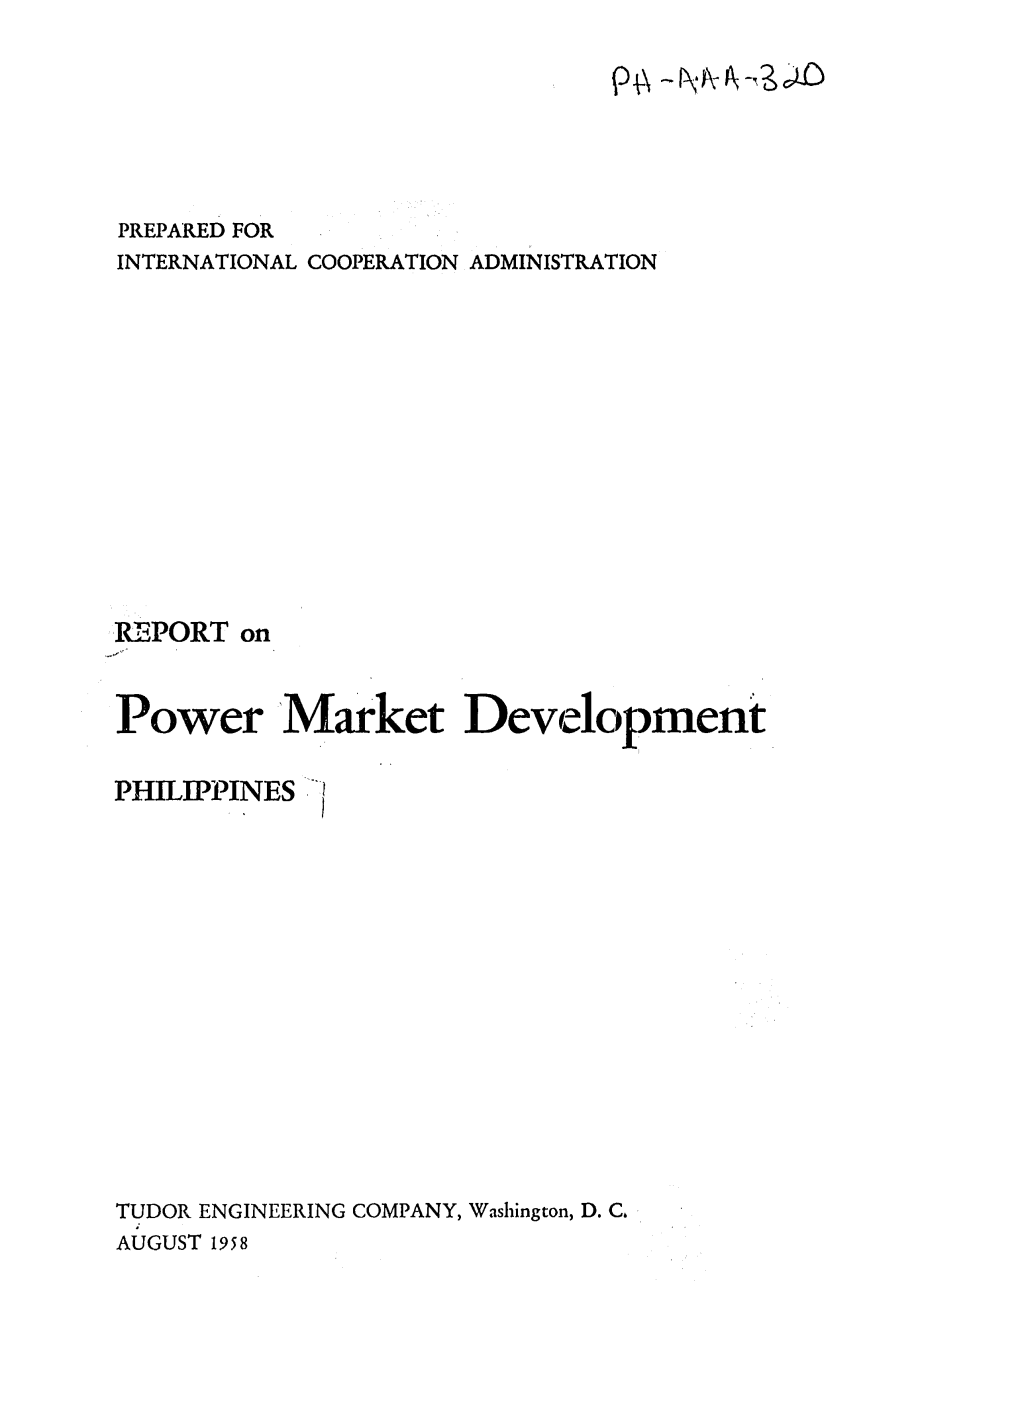 Power Market Development